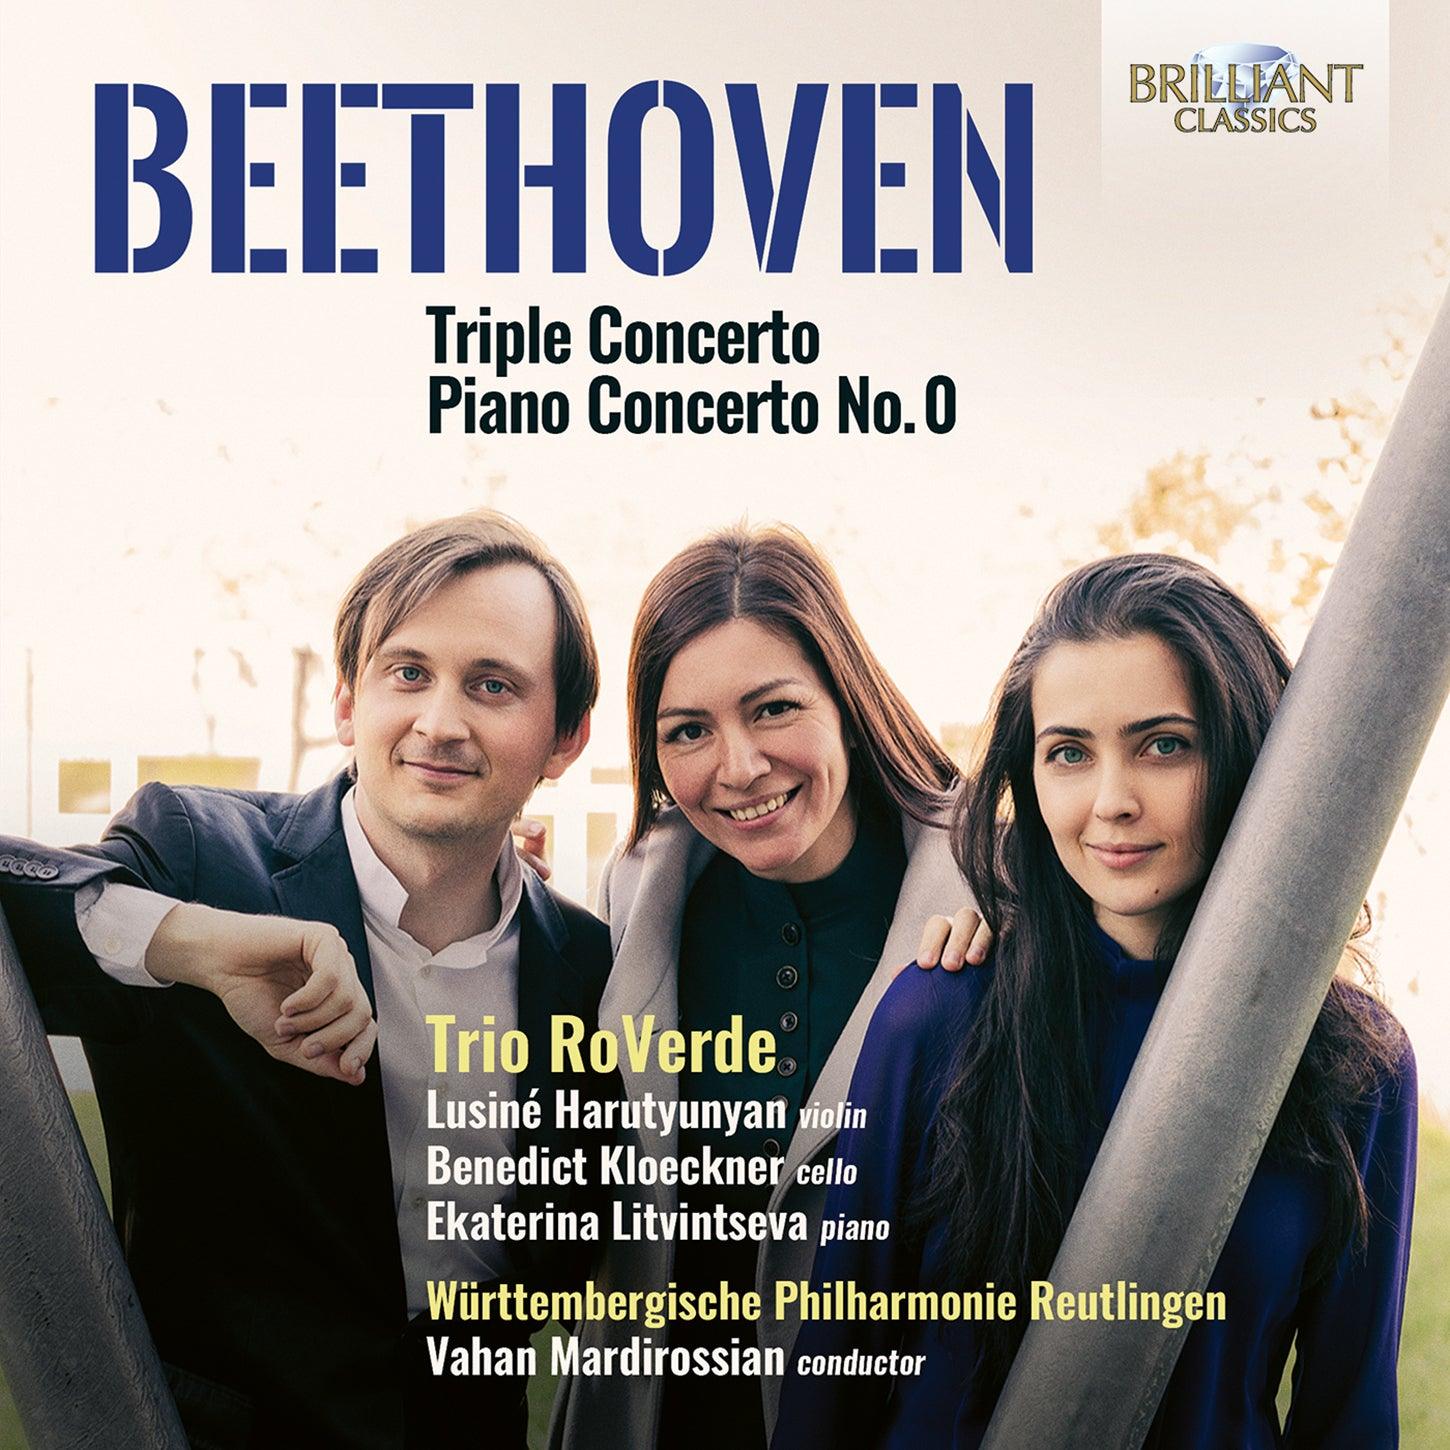 Beethoven: Triple Concerto and "Piano Concerto no. 0" / Trio RoVerde, Mardirossian, Württembergische Philharmonie Reutlingen - ArkivMusic